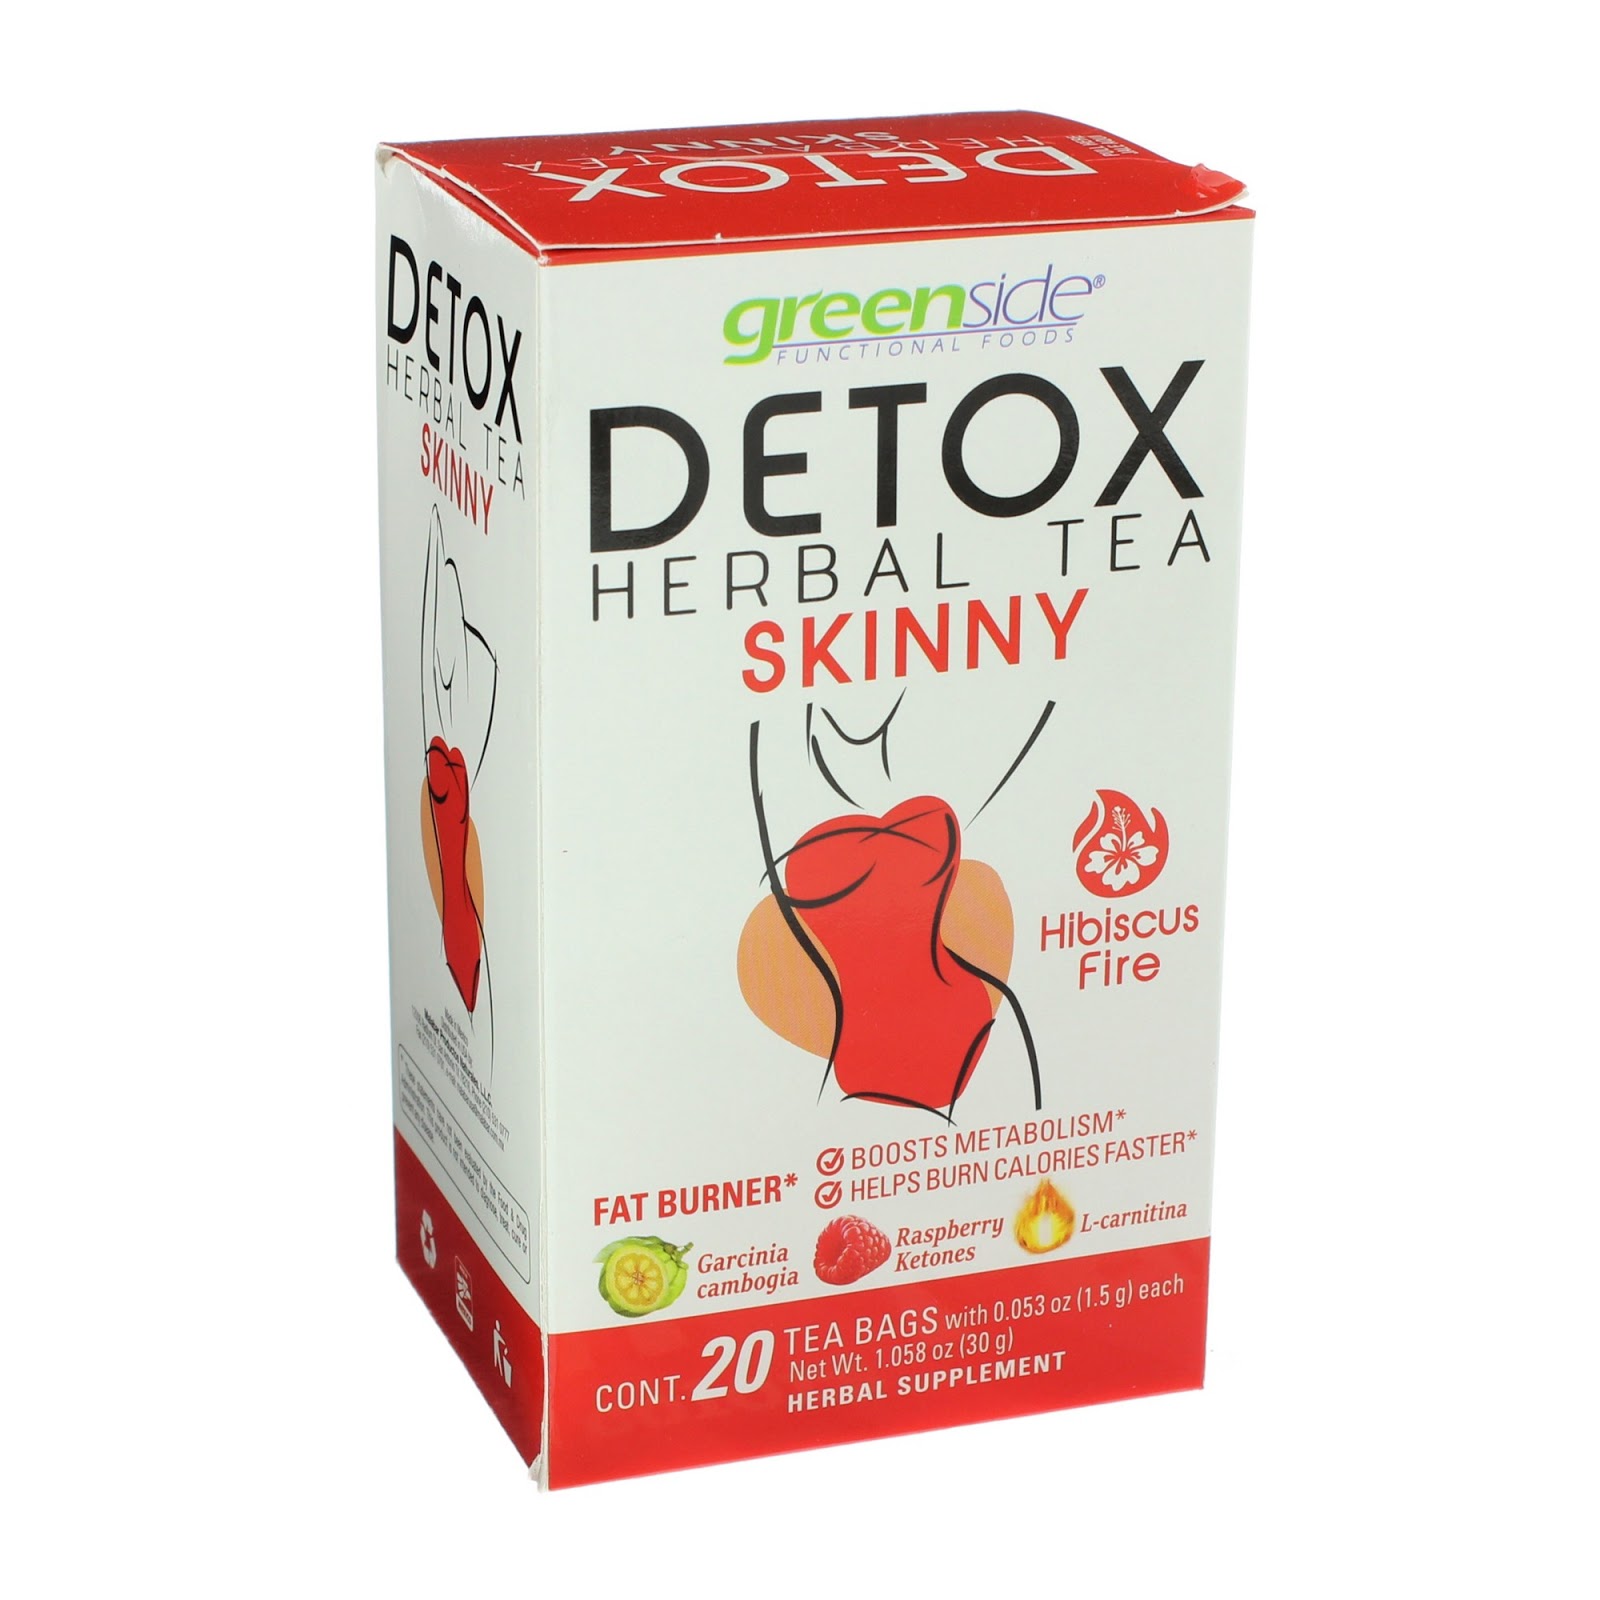 Detox Skinny Herb Tea. 